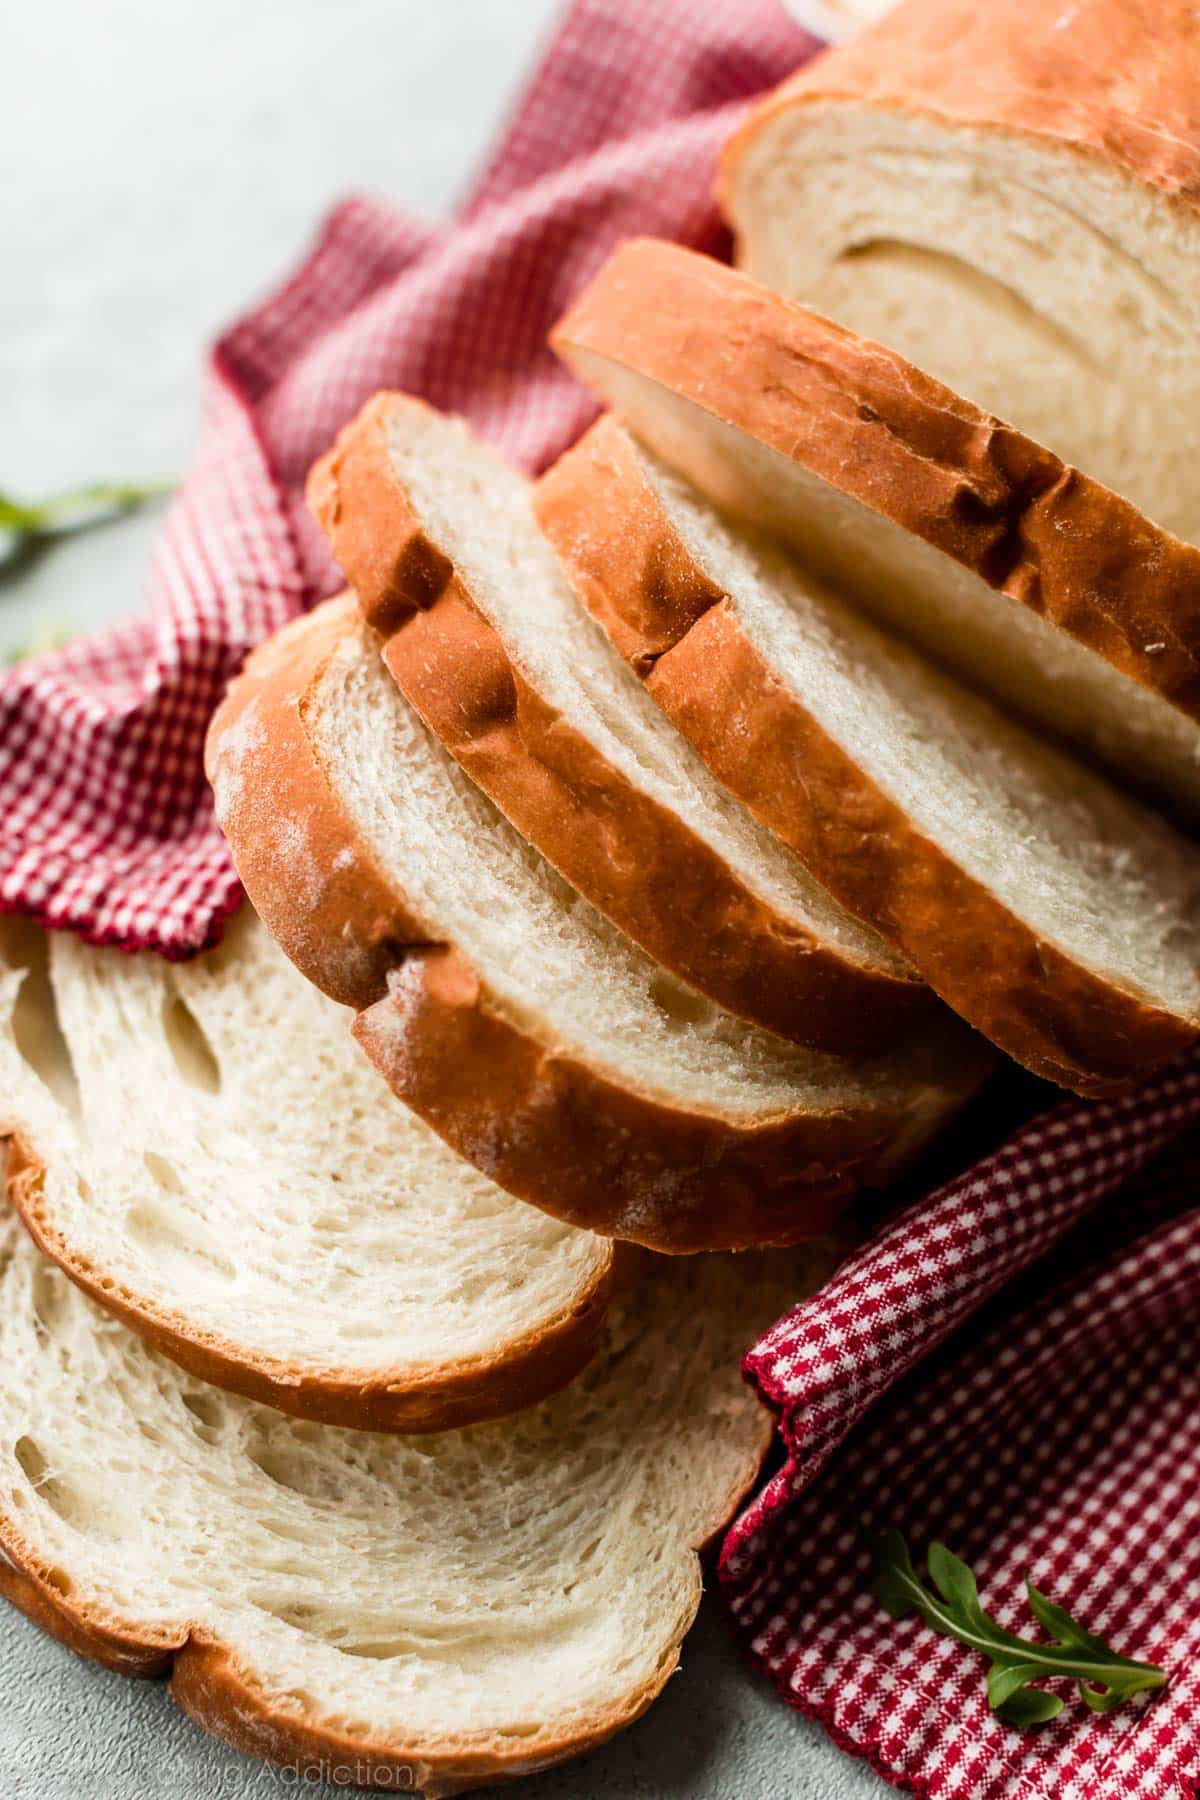 https://sallysbakingaddiction.com/wp-content/uploads/2019/11/sandwich-bread.jpg